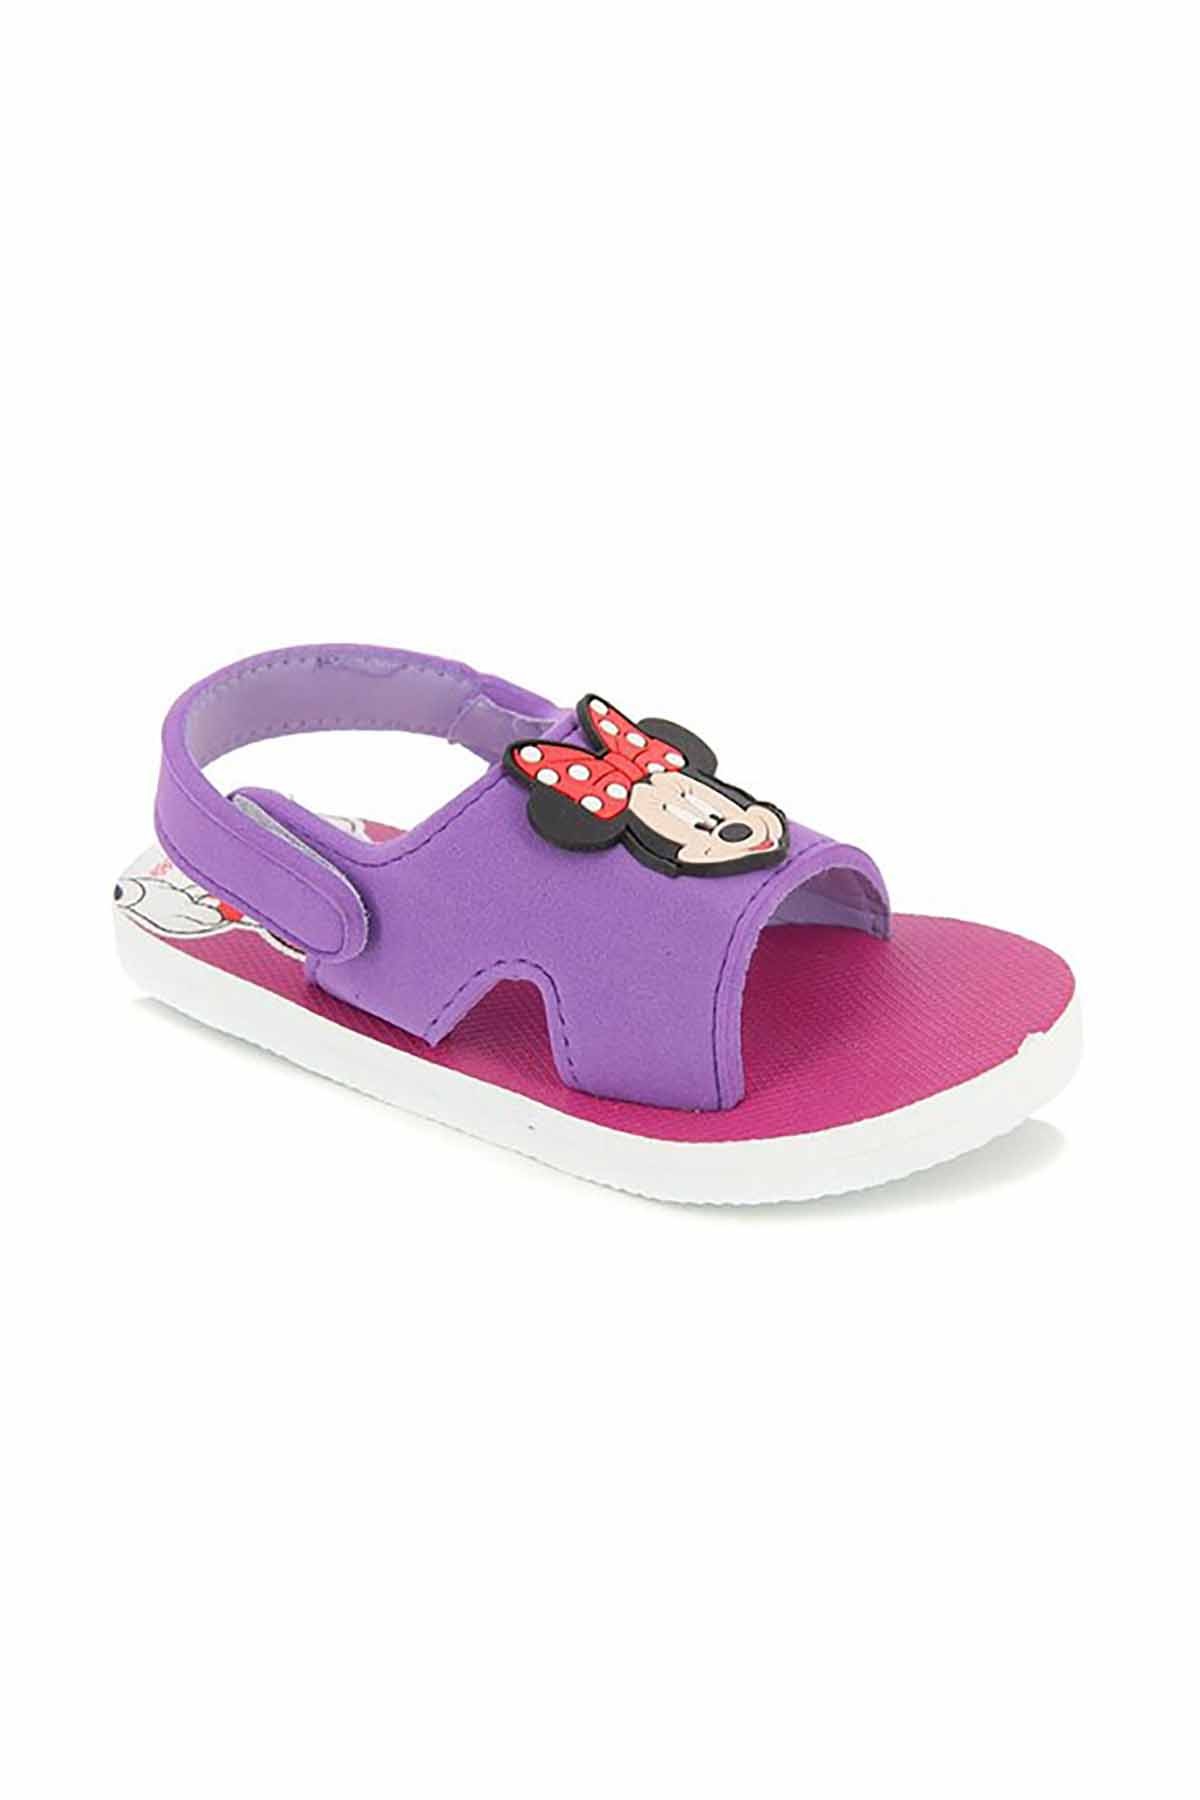 Gigi Ayakkabı Minnie Mouse Patik Sandalet Mor 27